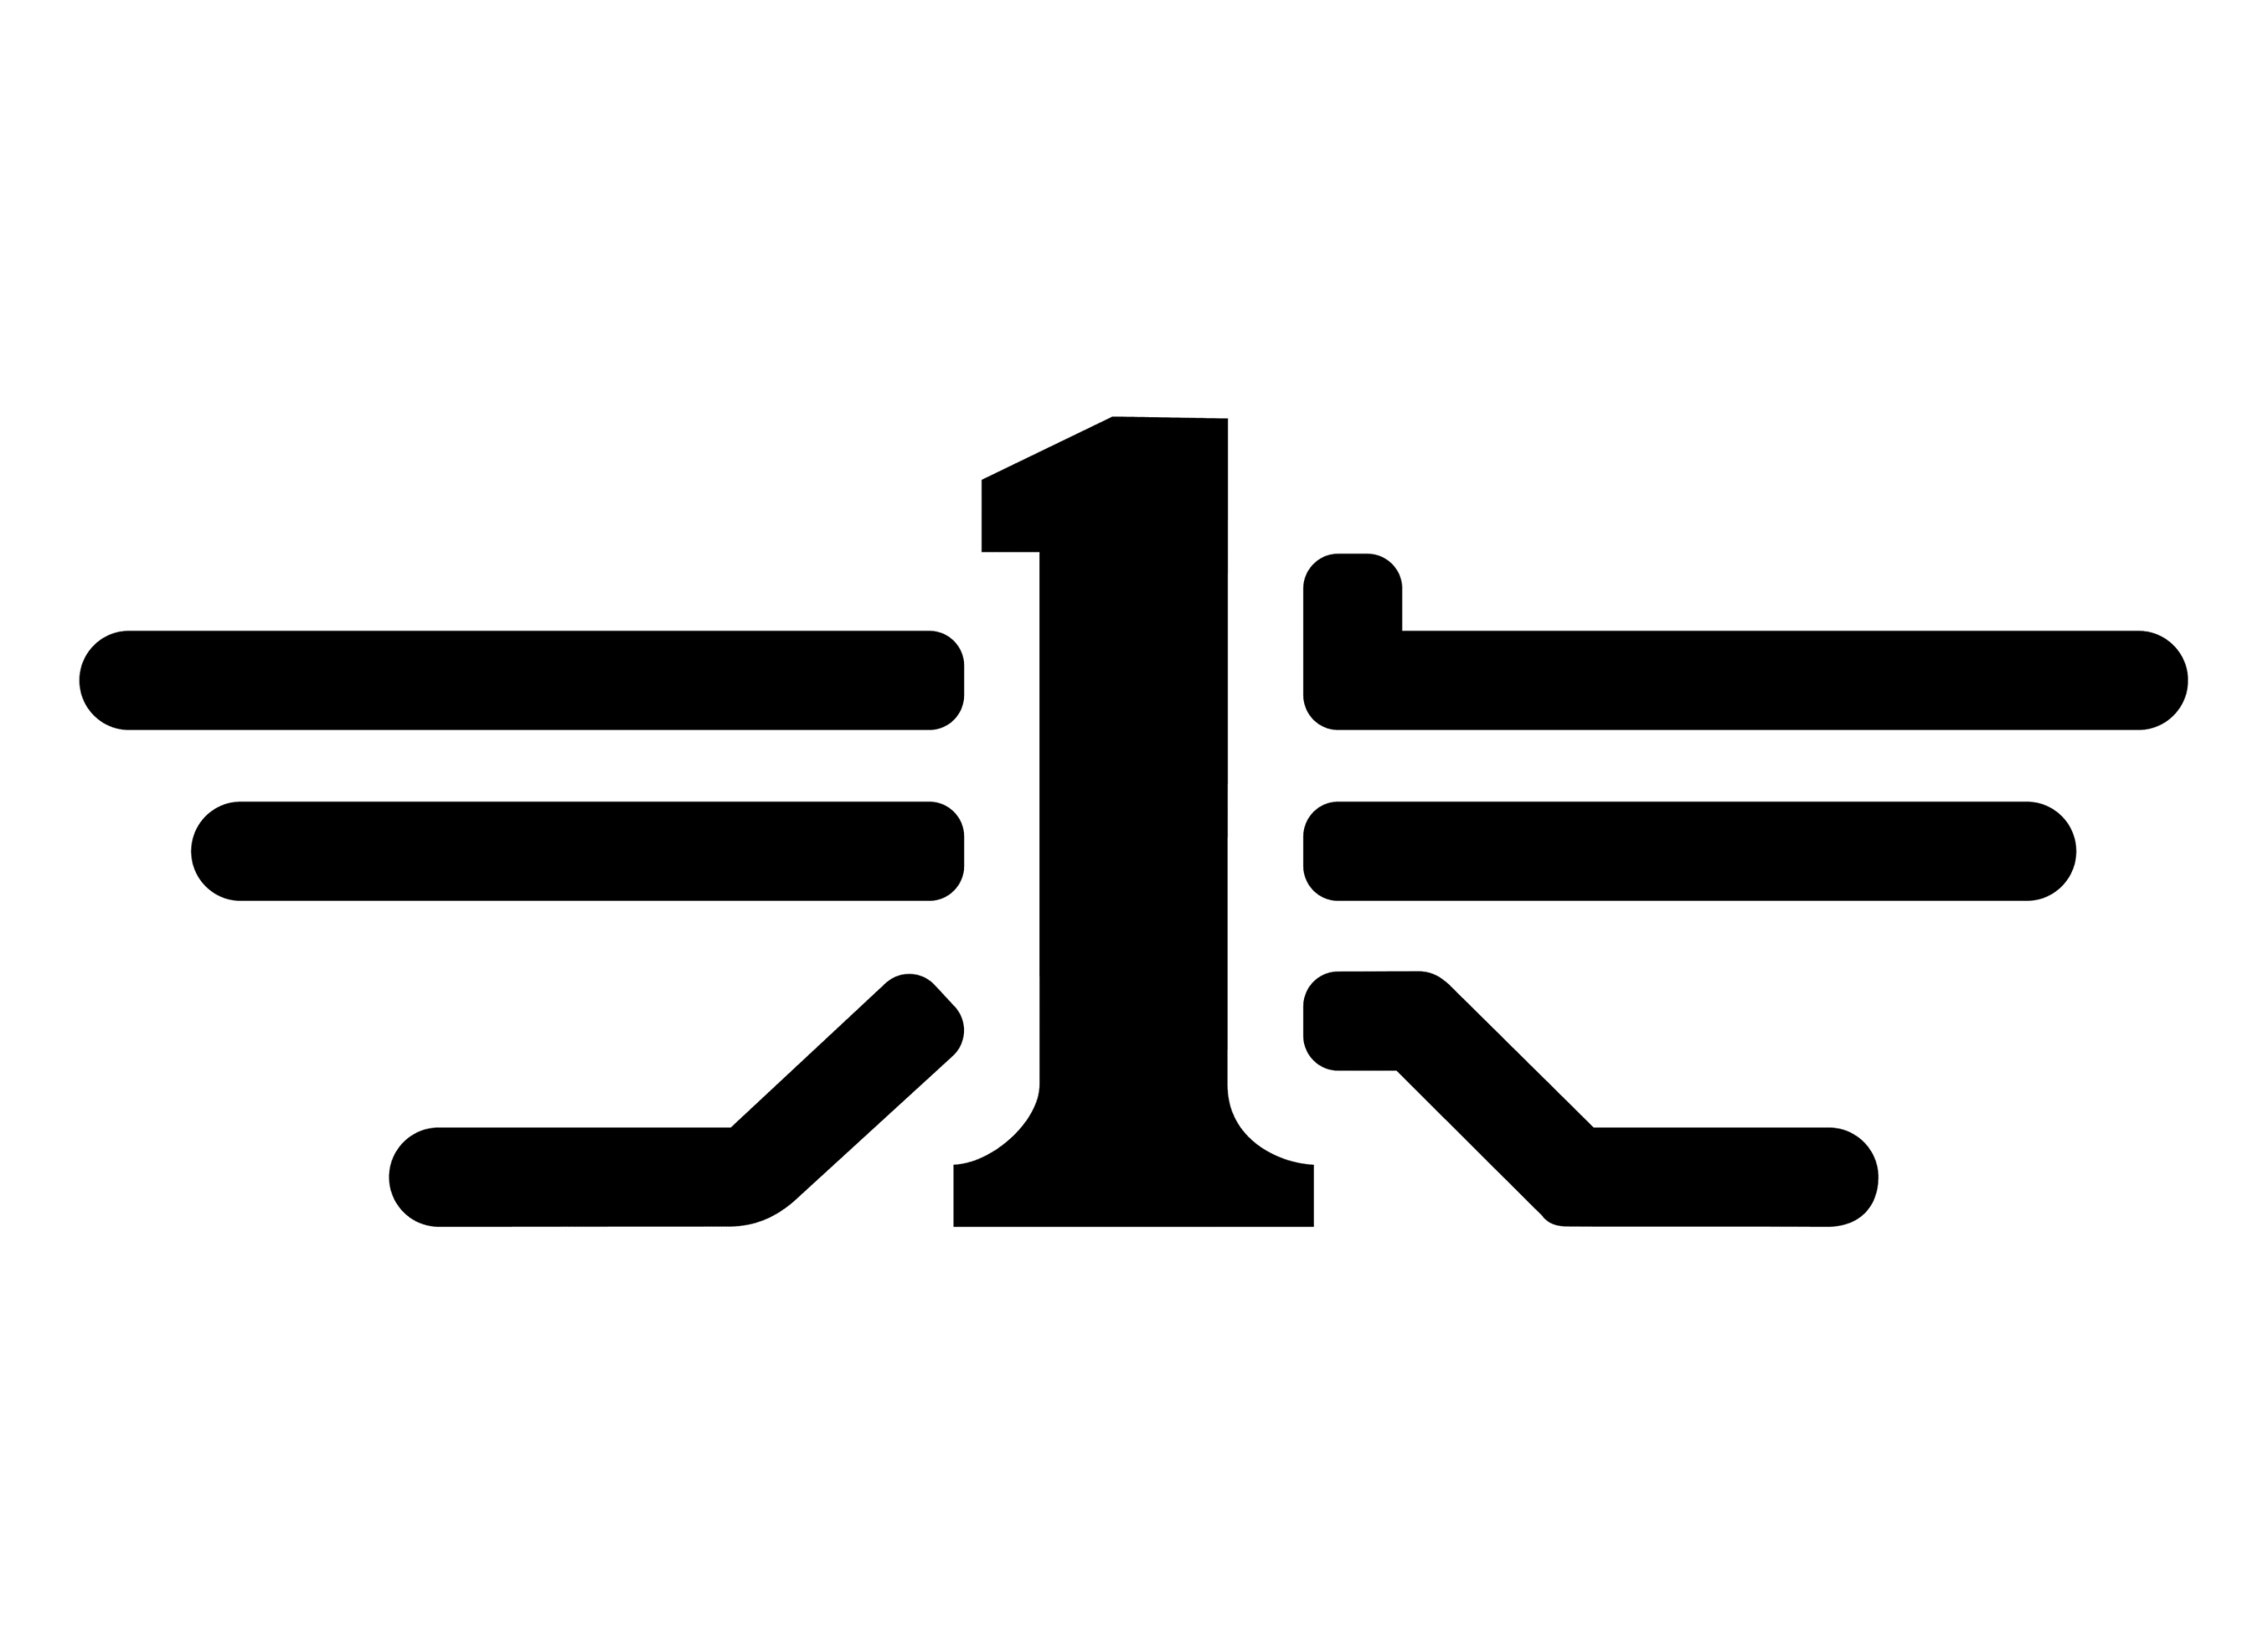 FAW logo 1953-1988